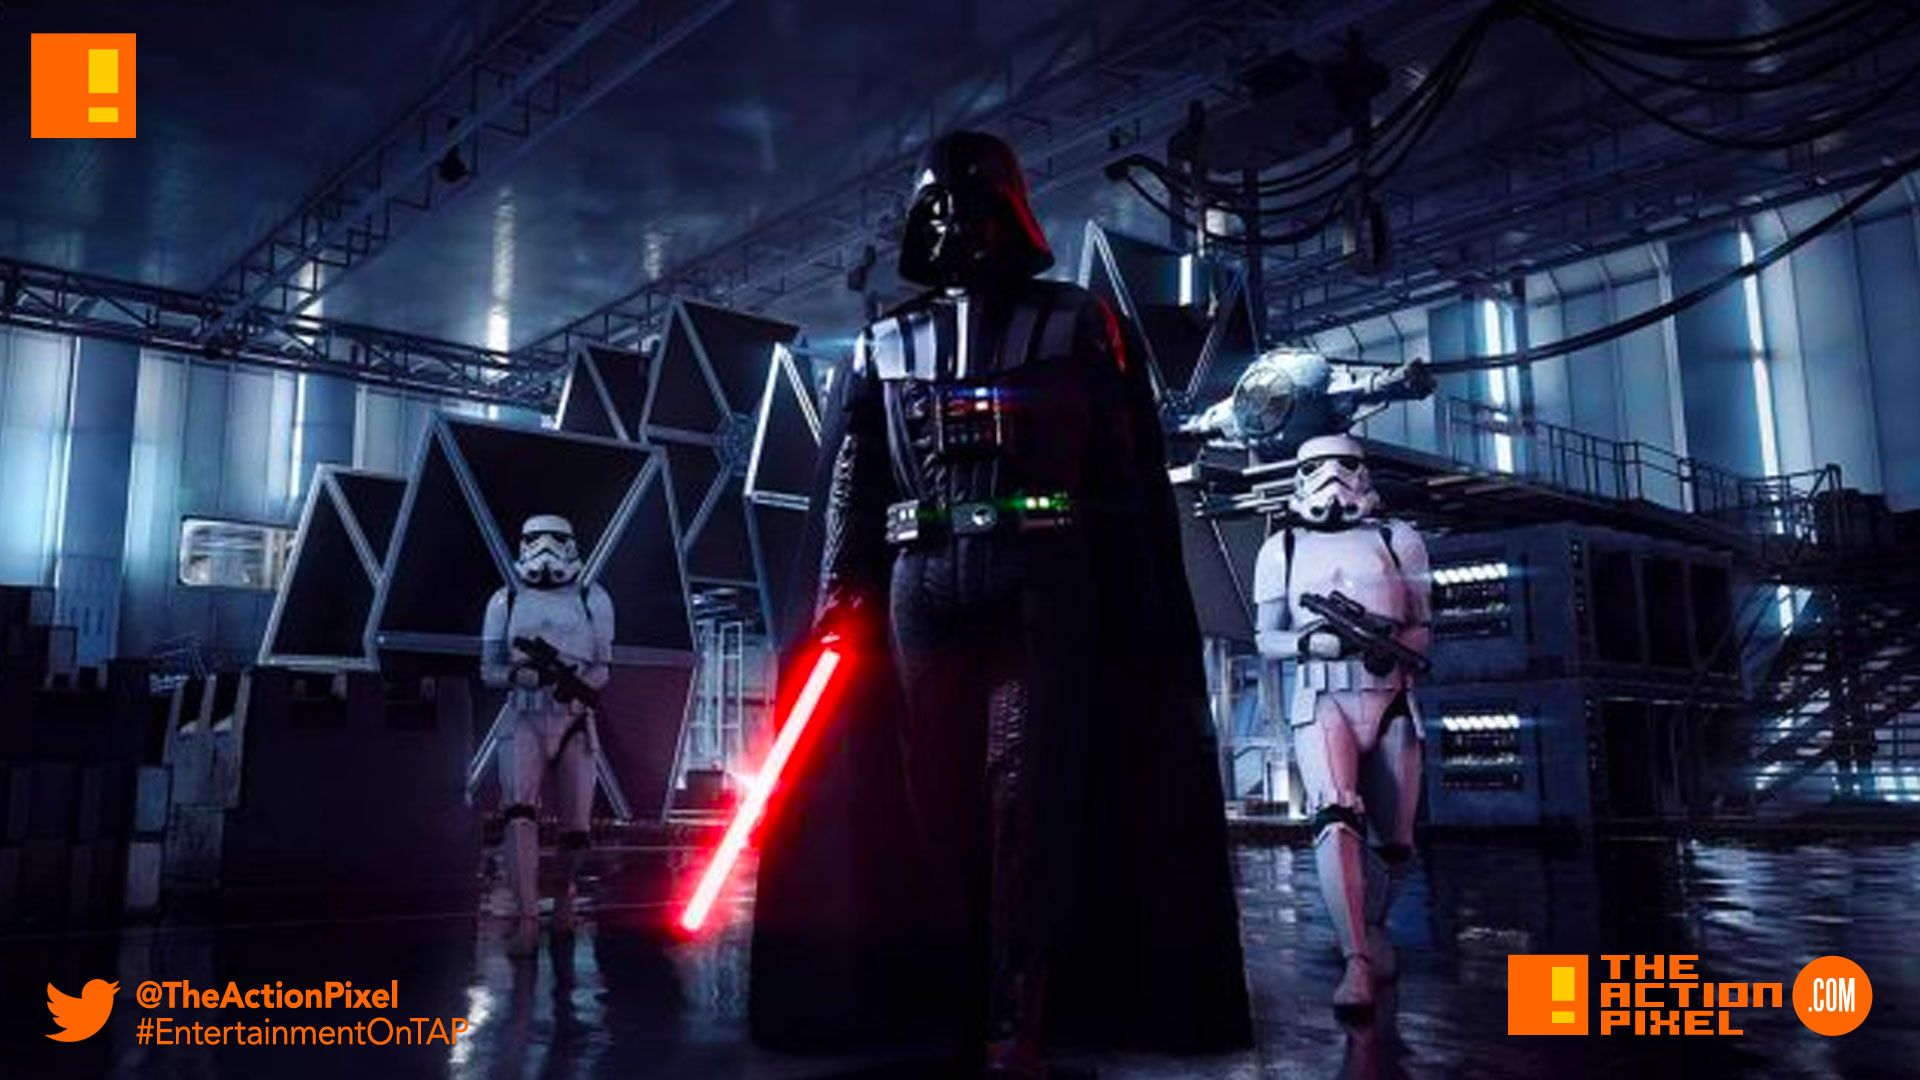 Darth Vader force chokes his way into EA's “Star Wars Battlefront II”